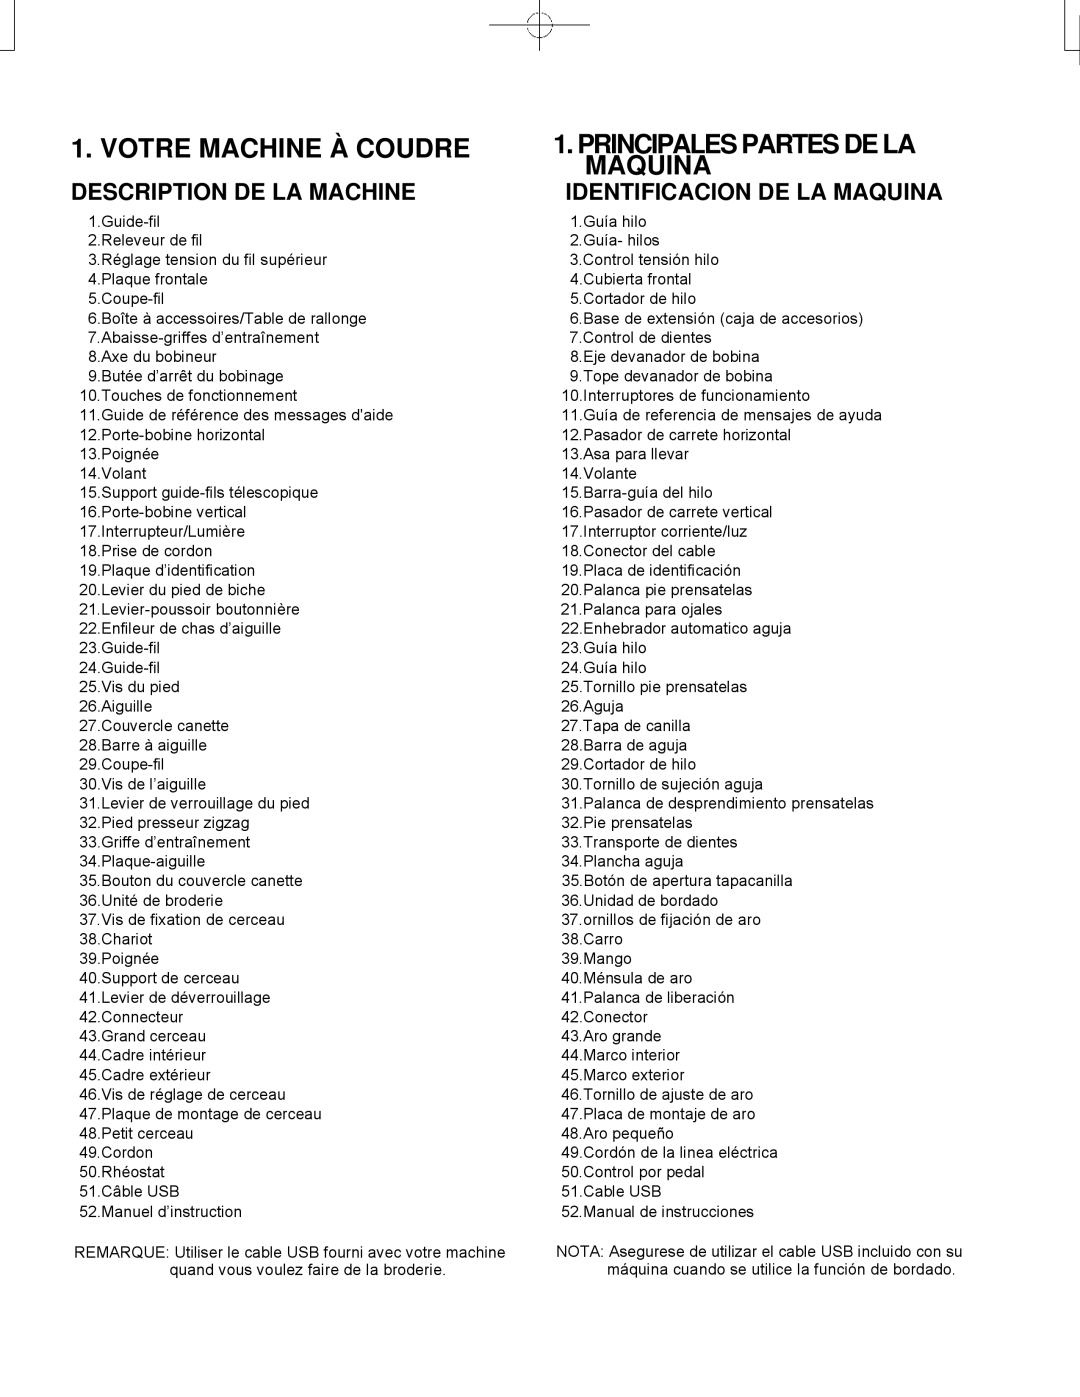 Singer CE-150 instruction manual Description DE LA Machine, Identificacion DE LA Maquina 